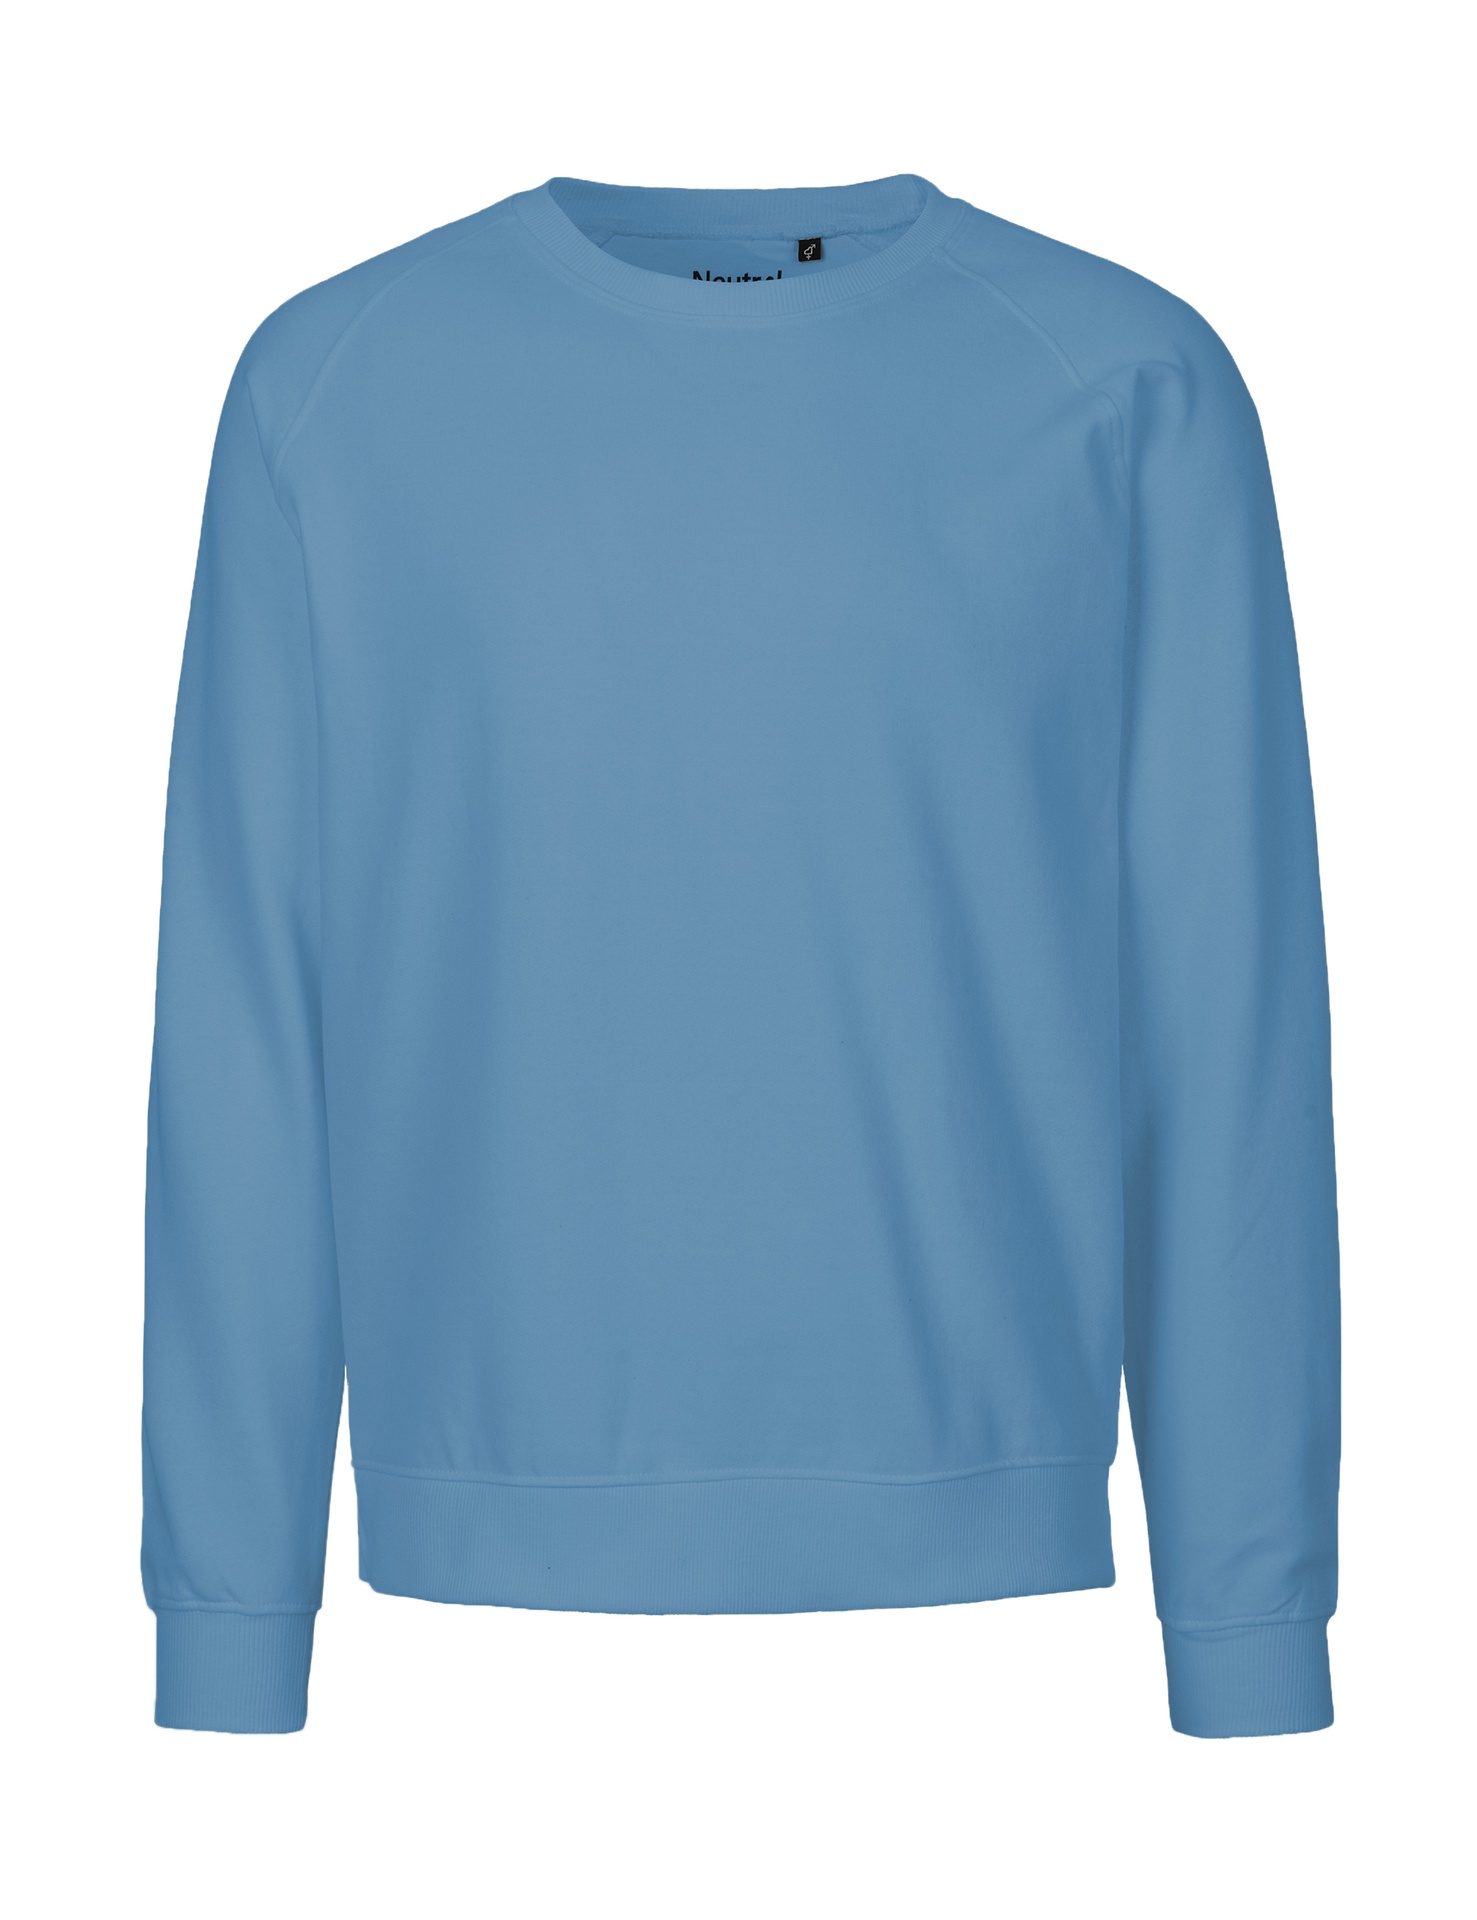 [PR/02834] Unisex Sweatshirt (Dusty Indigo 41, M)